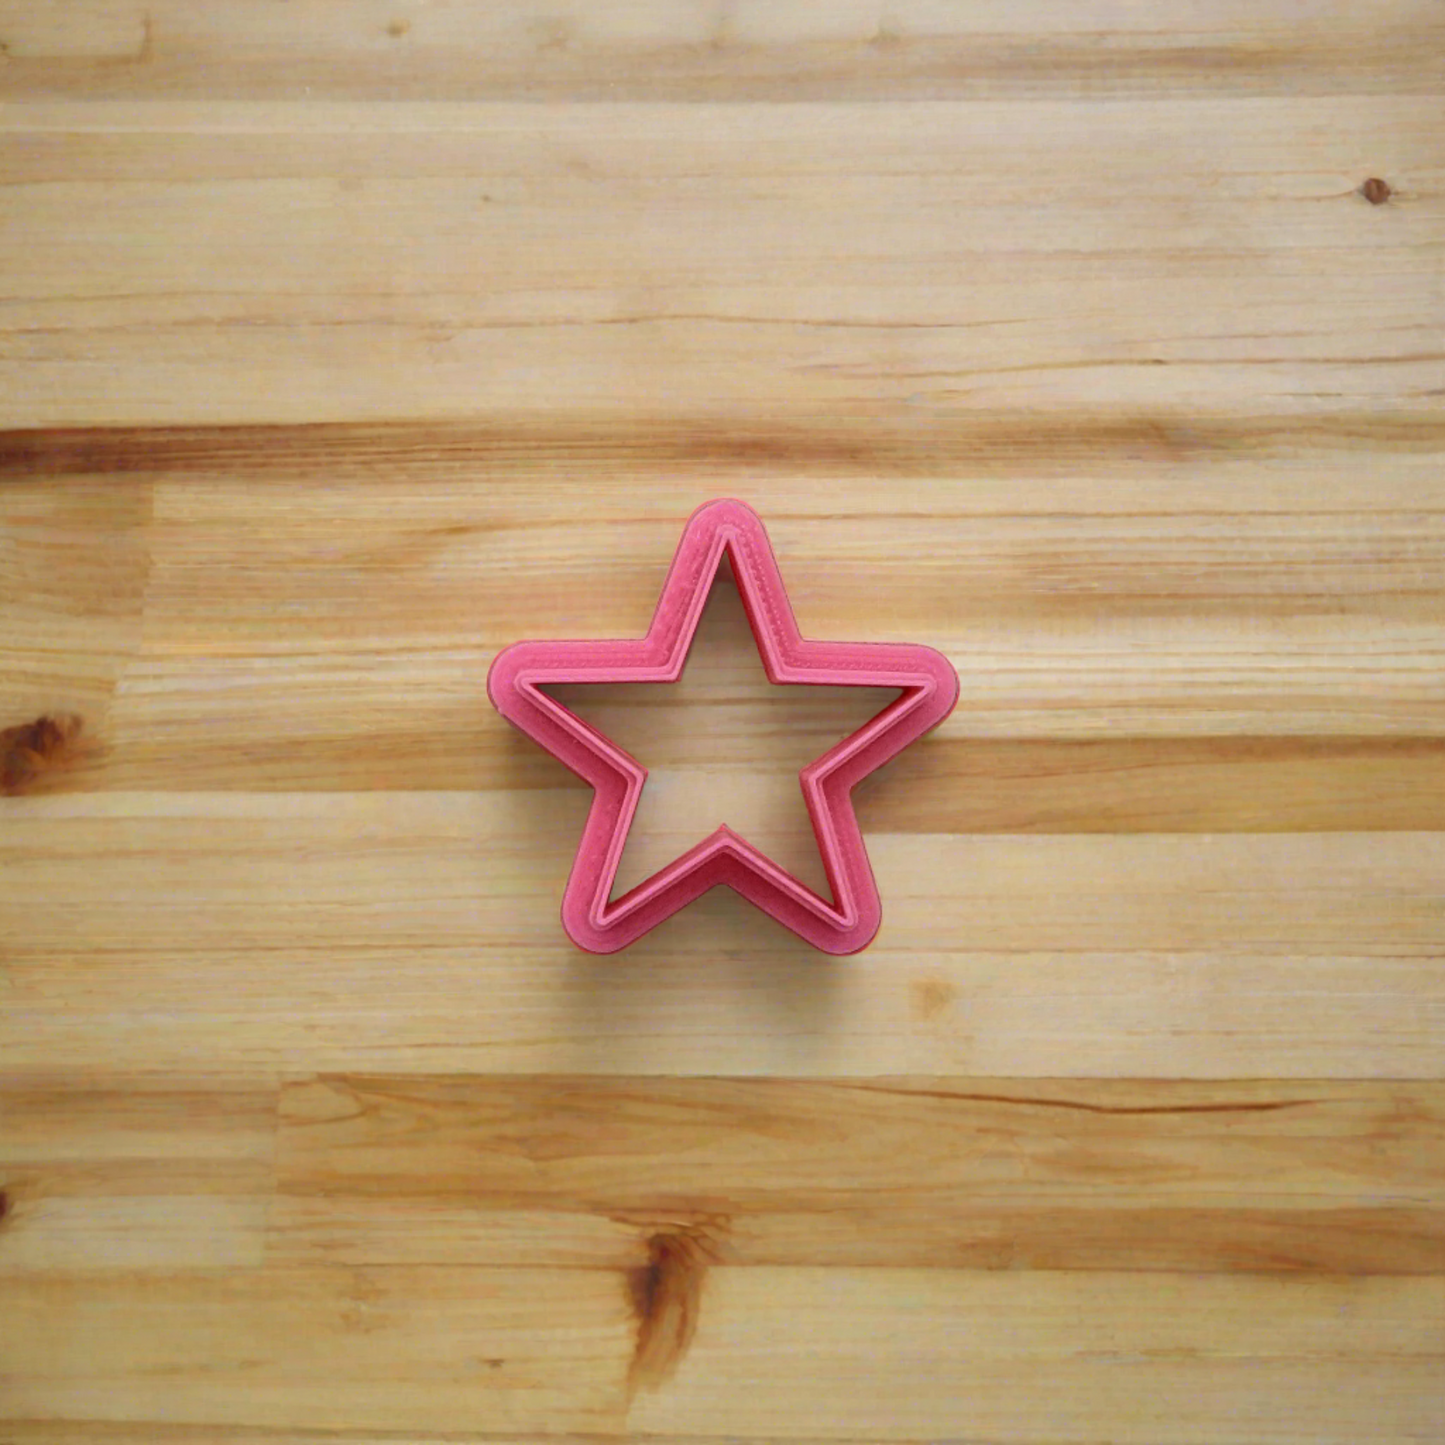 Star Shape Cutter for Cookies, Ceramics, Pottery, Polymer Clay, Fondant - Multi-Medium Craft & Baking Tool